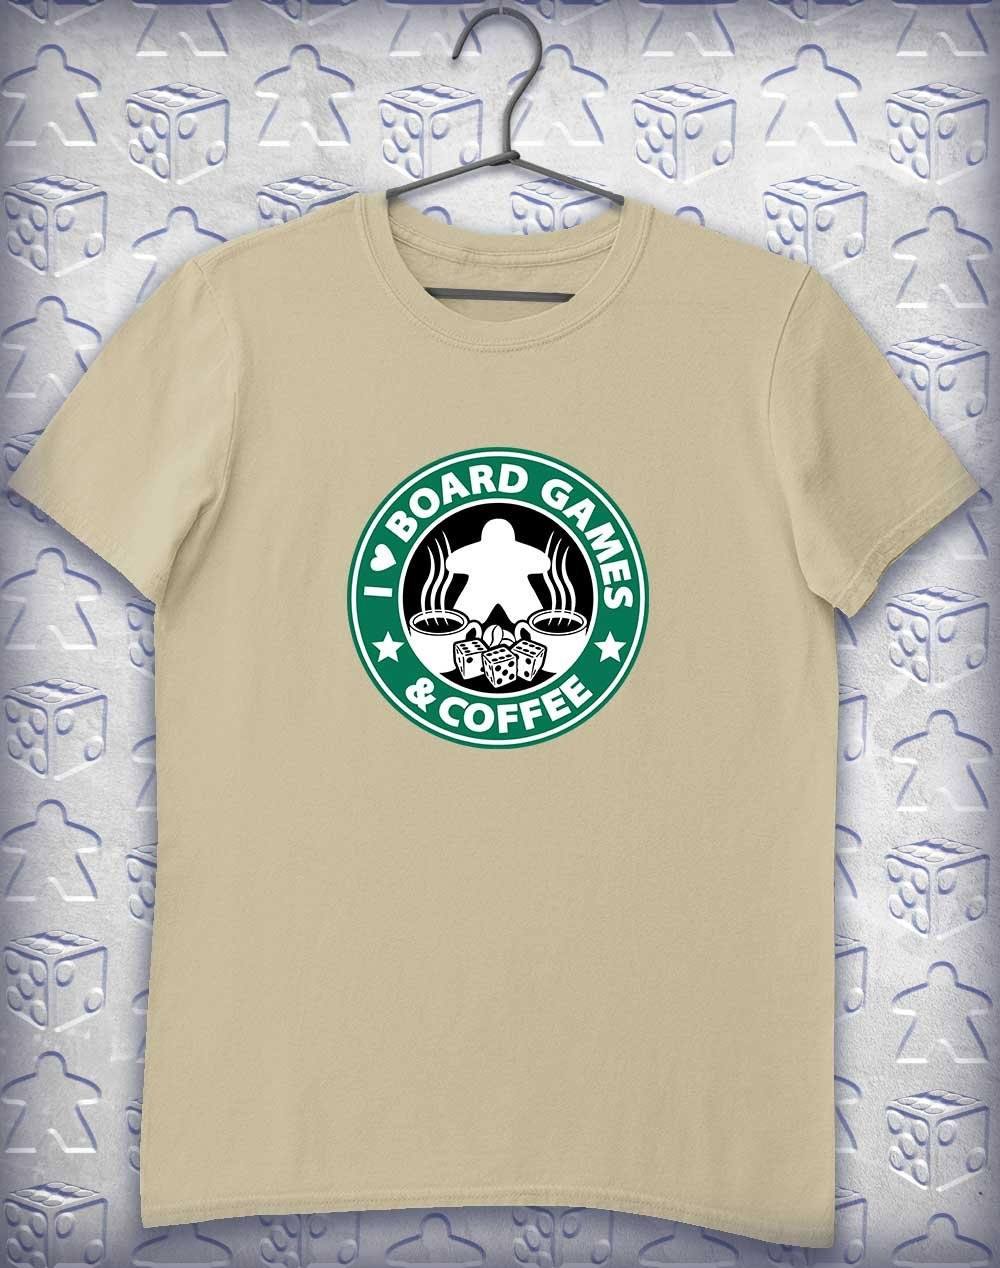 Board Games & Coffee Alphagamer T Shirt S / Sand  - Off World Tees